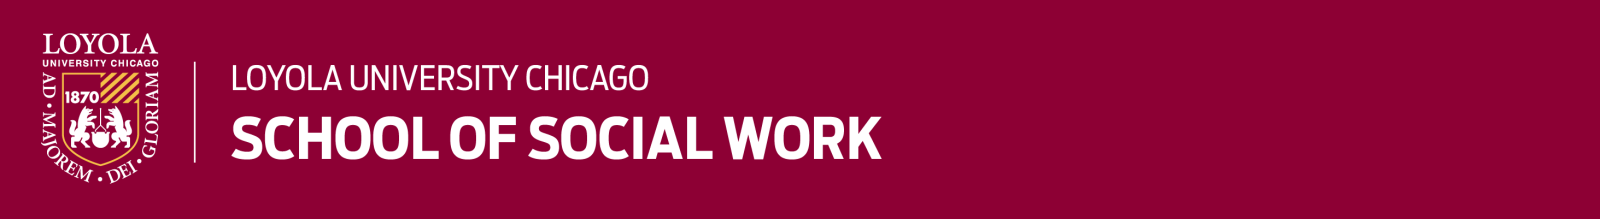 Loyola University Chicago School of Social Work